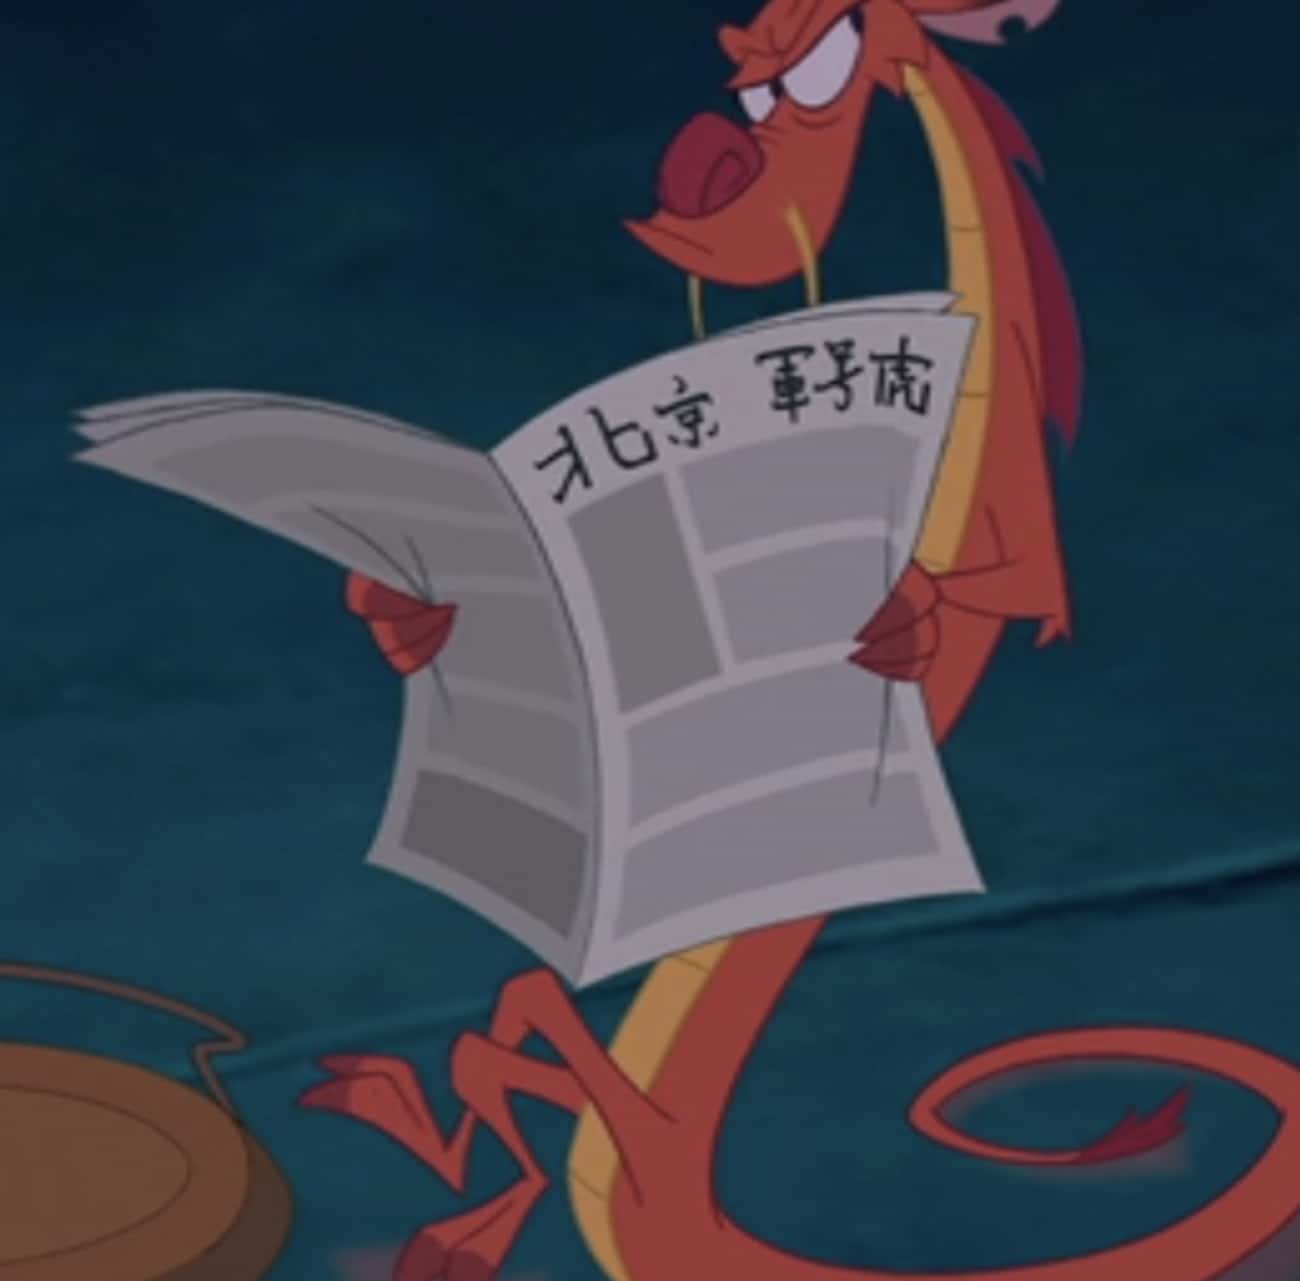 Mushu Reads Correctly In 'Mulan'